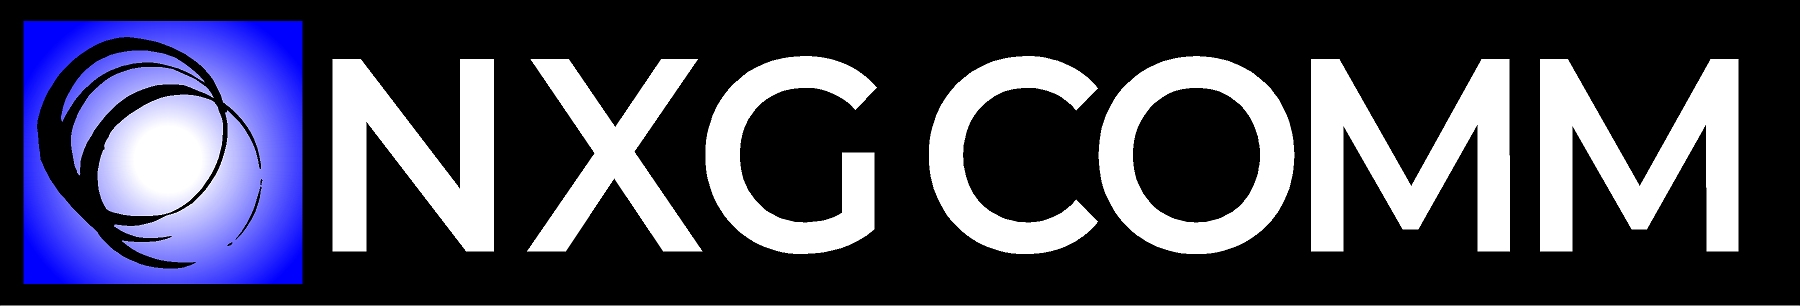 Next Generation Communications Logo